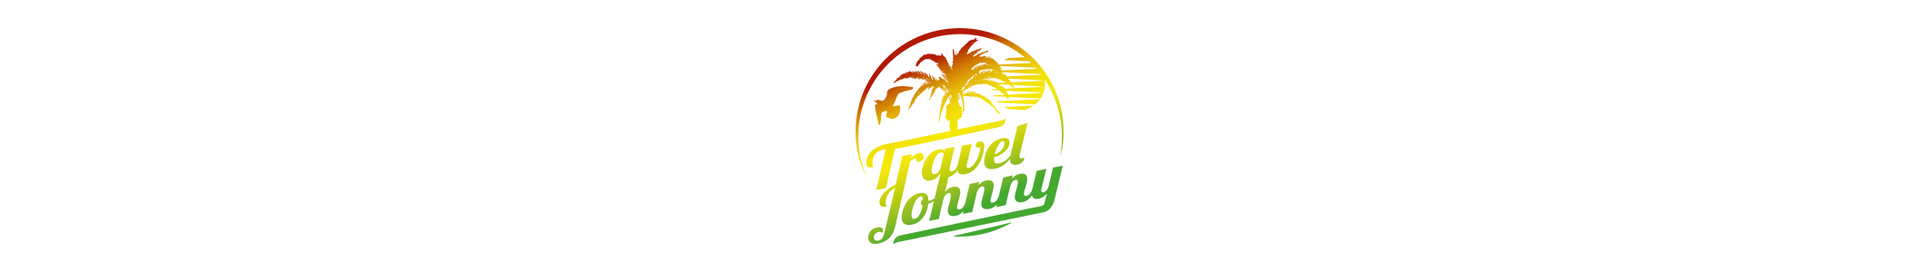 Travel_johnny